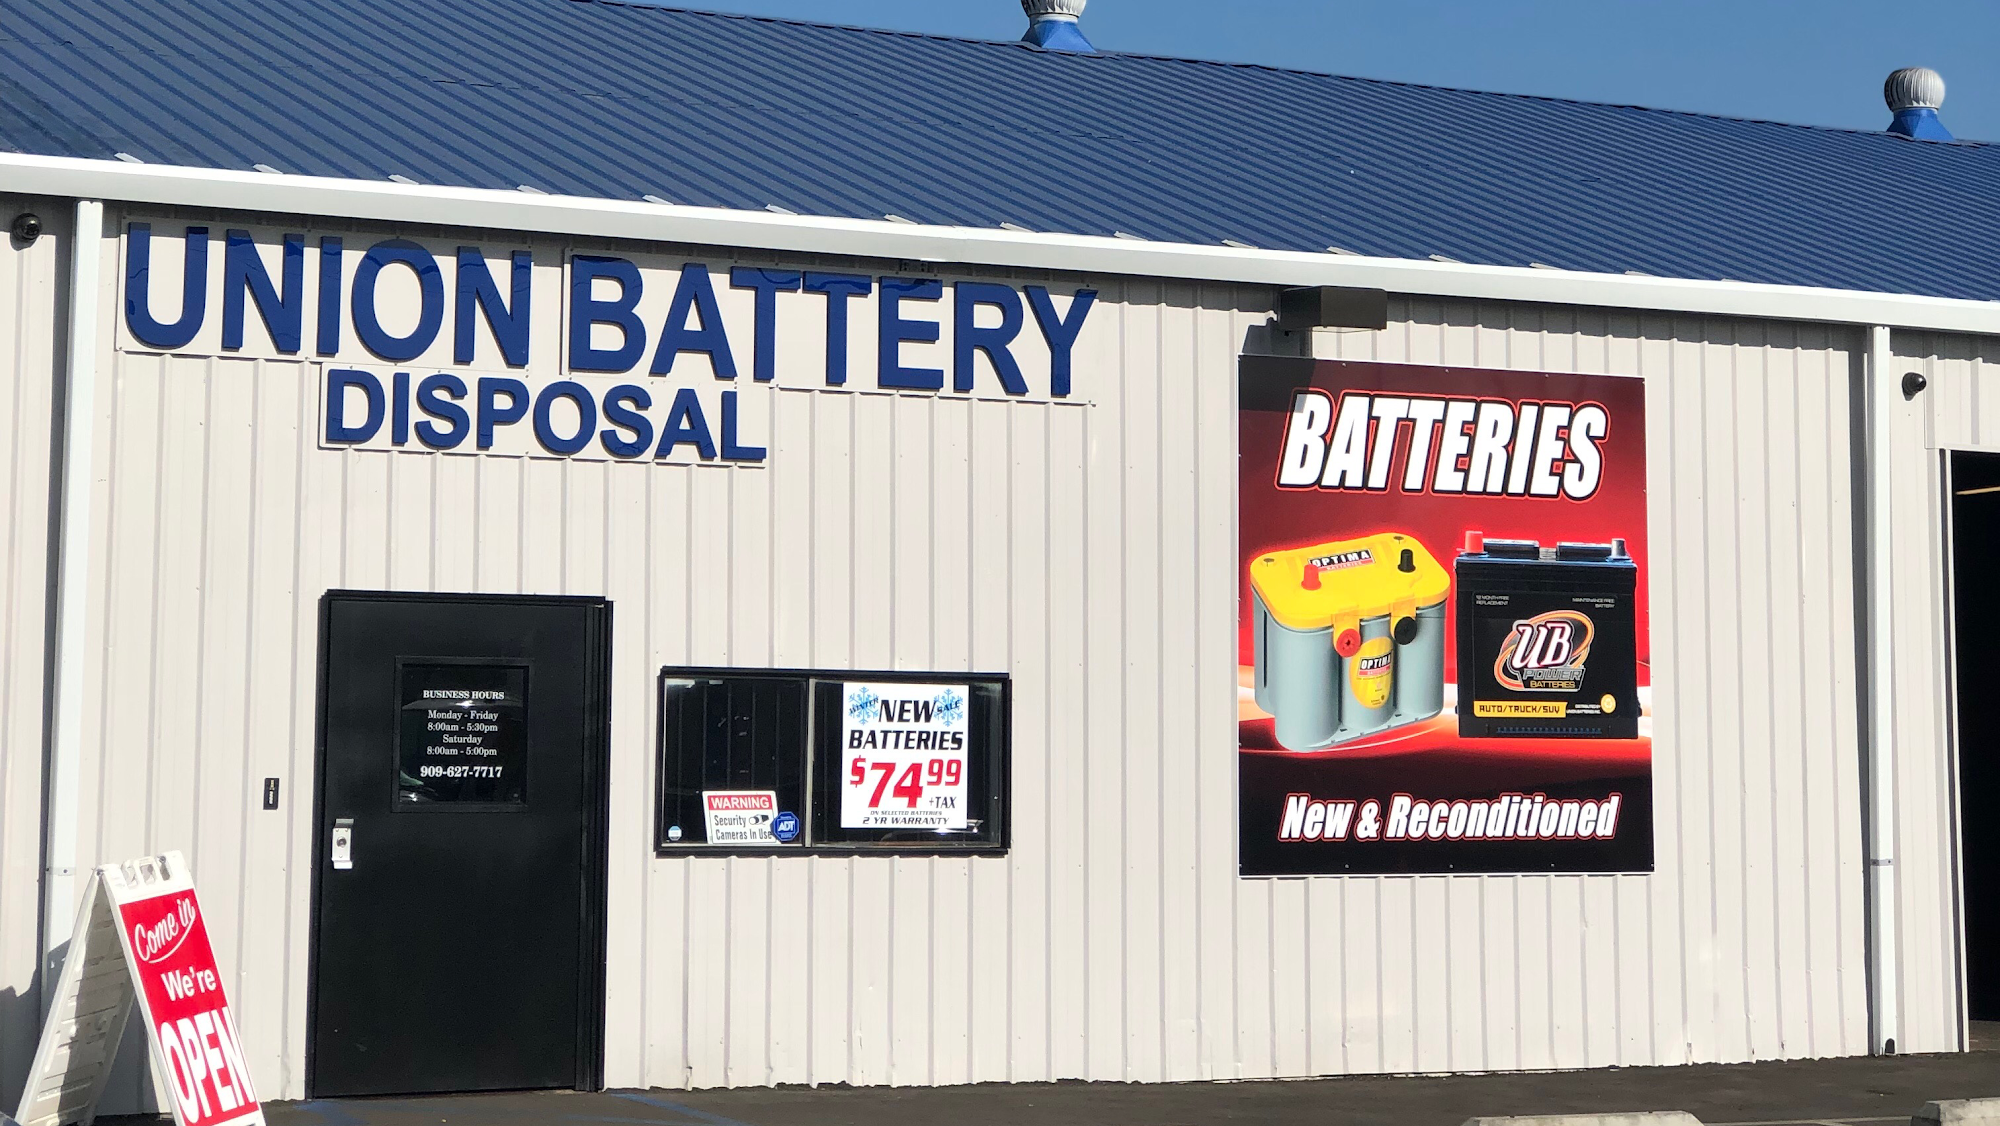 Union Battery Disposal